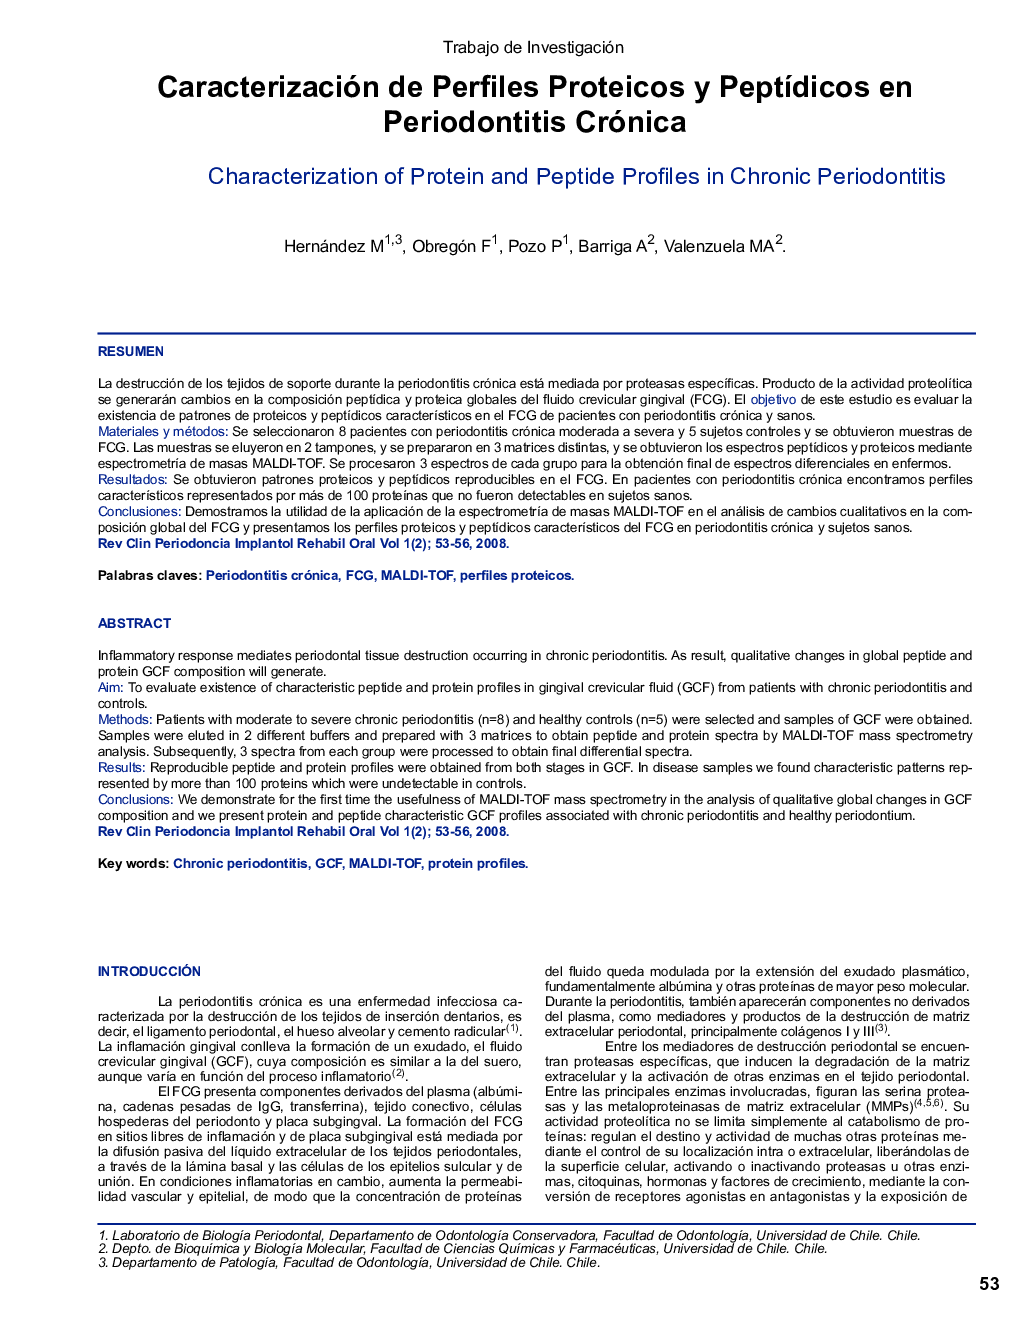 Caracterización de Perfiles Proteicos y Peptídicos en Periodontitis Crónica